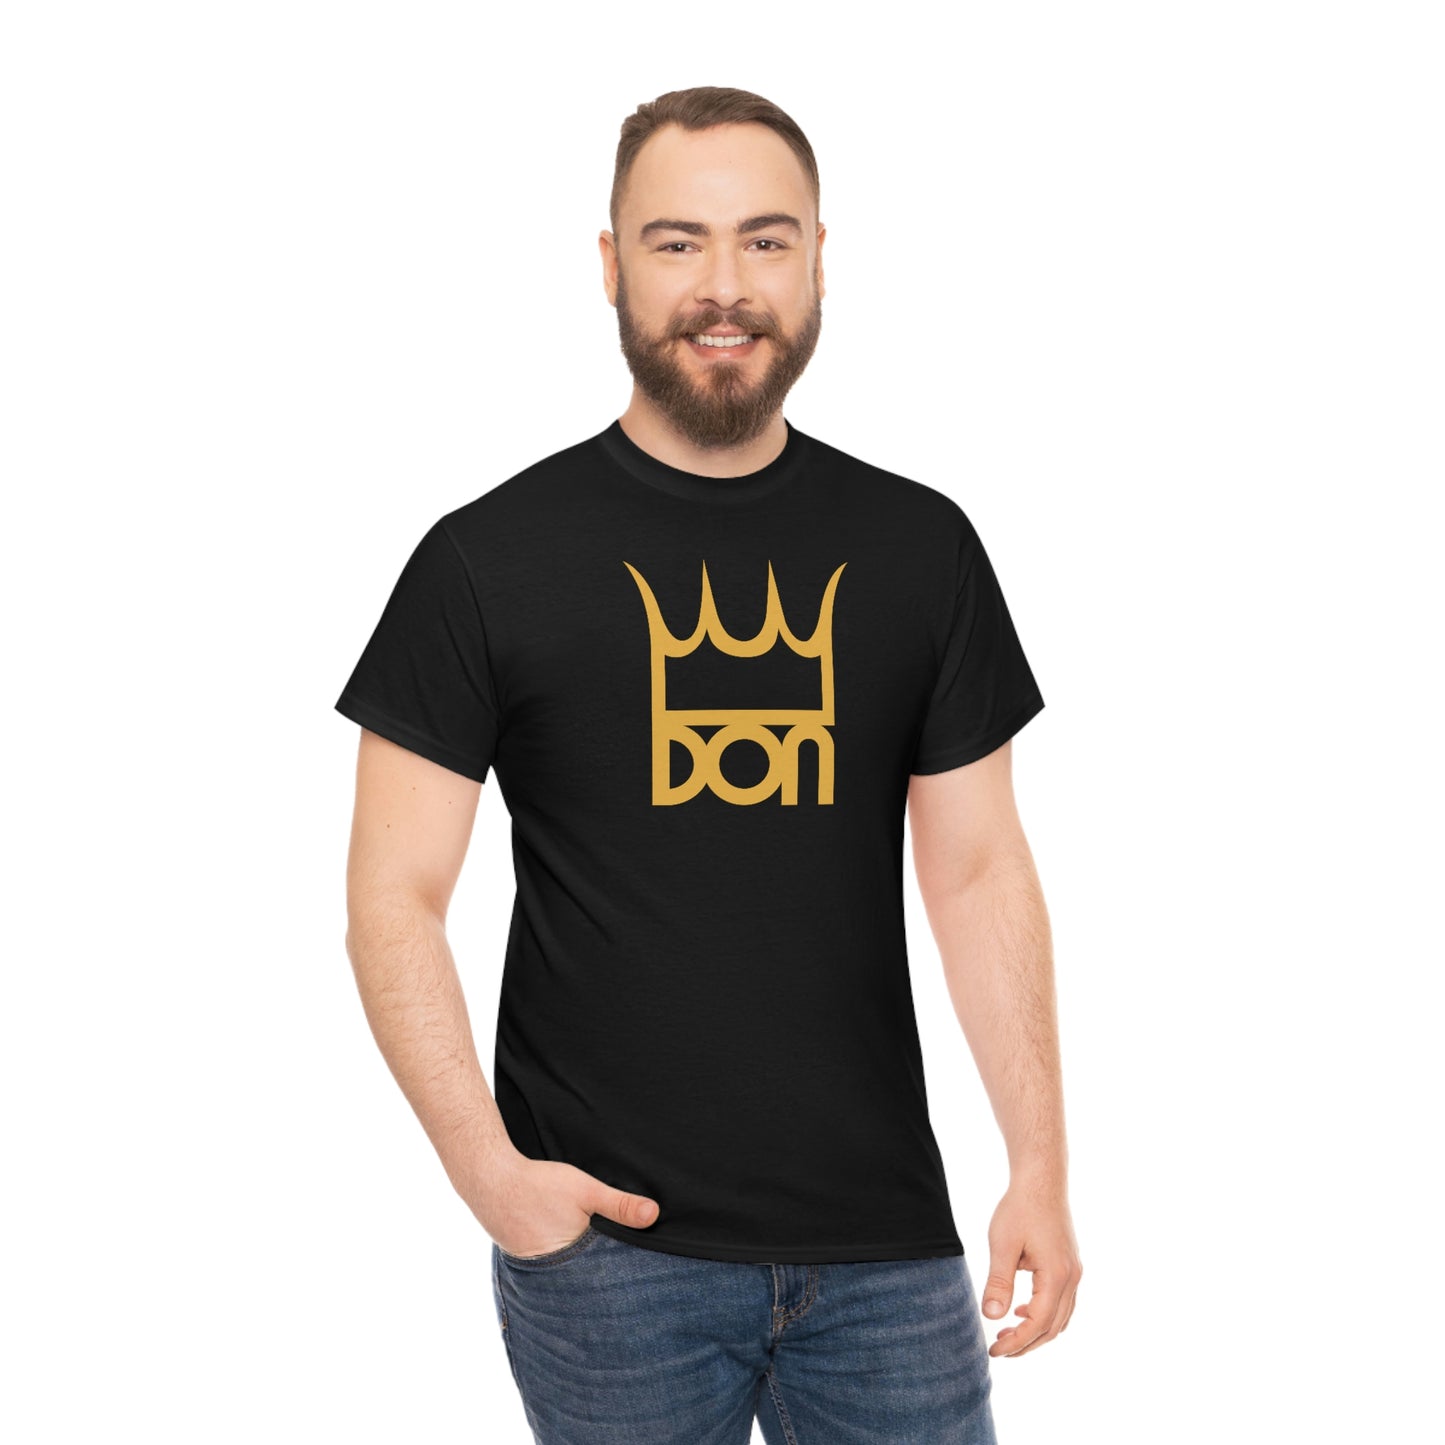 Don King T-Shirt